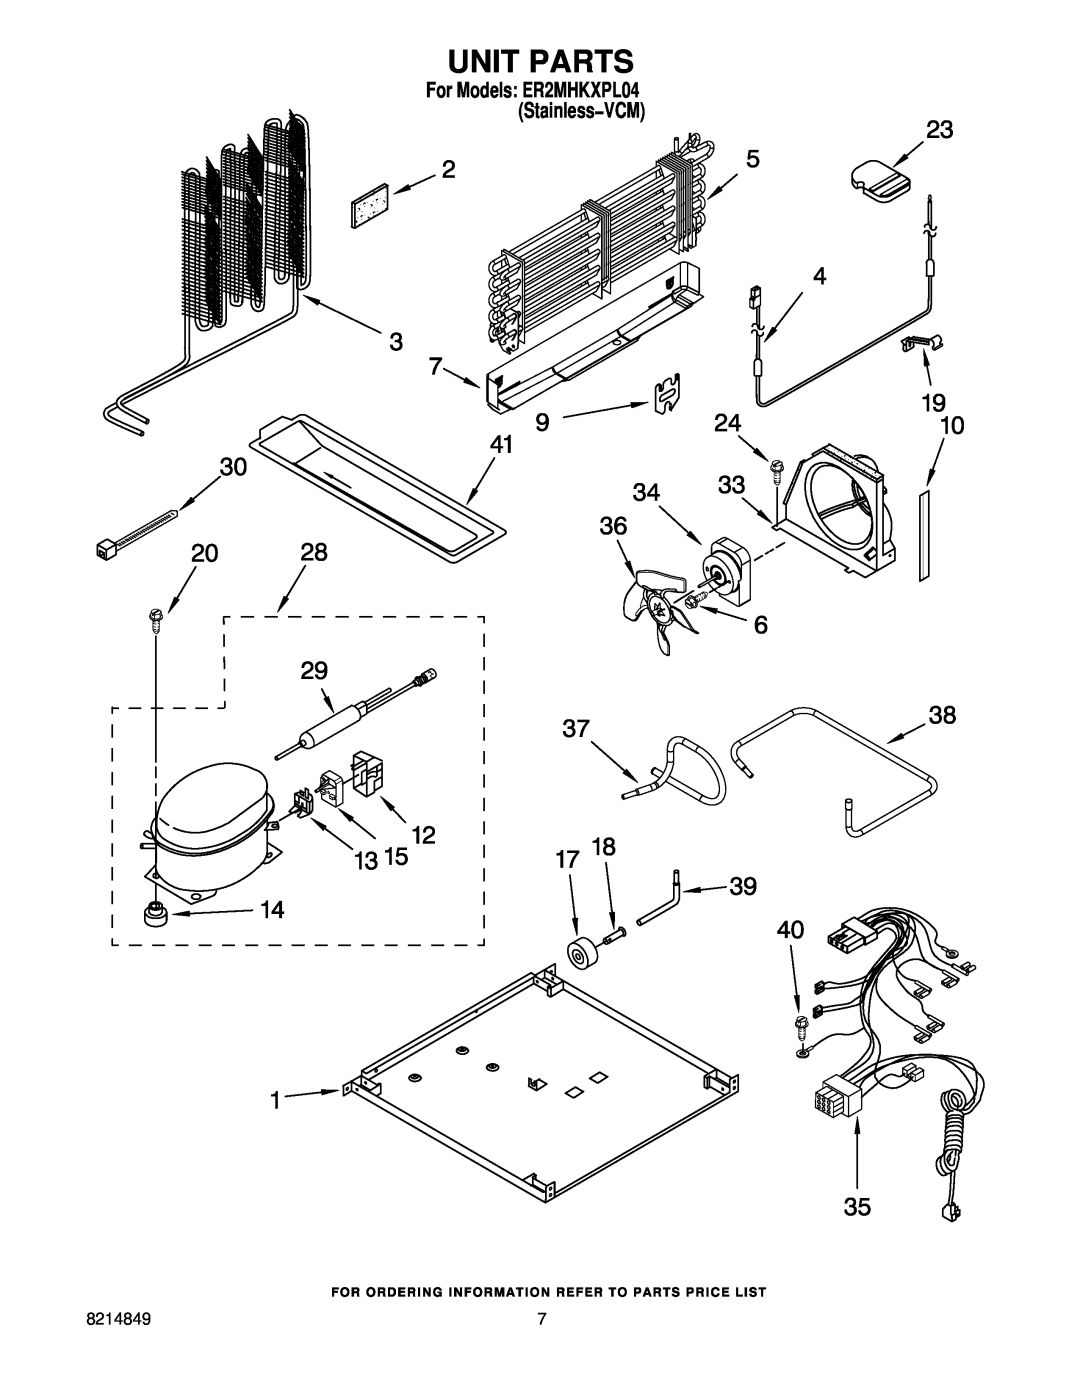 Whirlpool manual Unit Parts, For Models ER2MHKXPL04 Stainless−VCM 